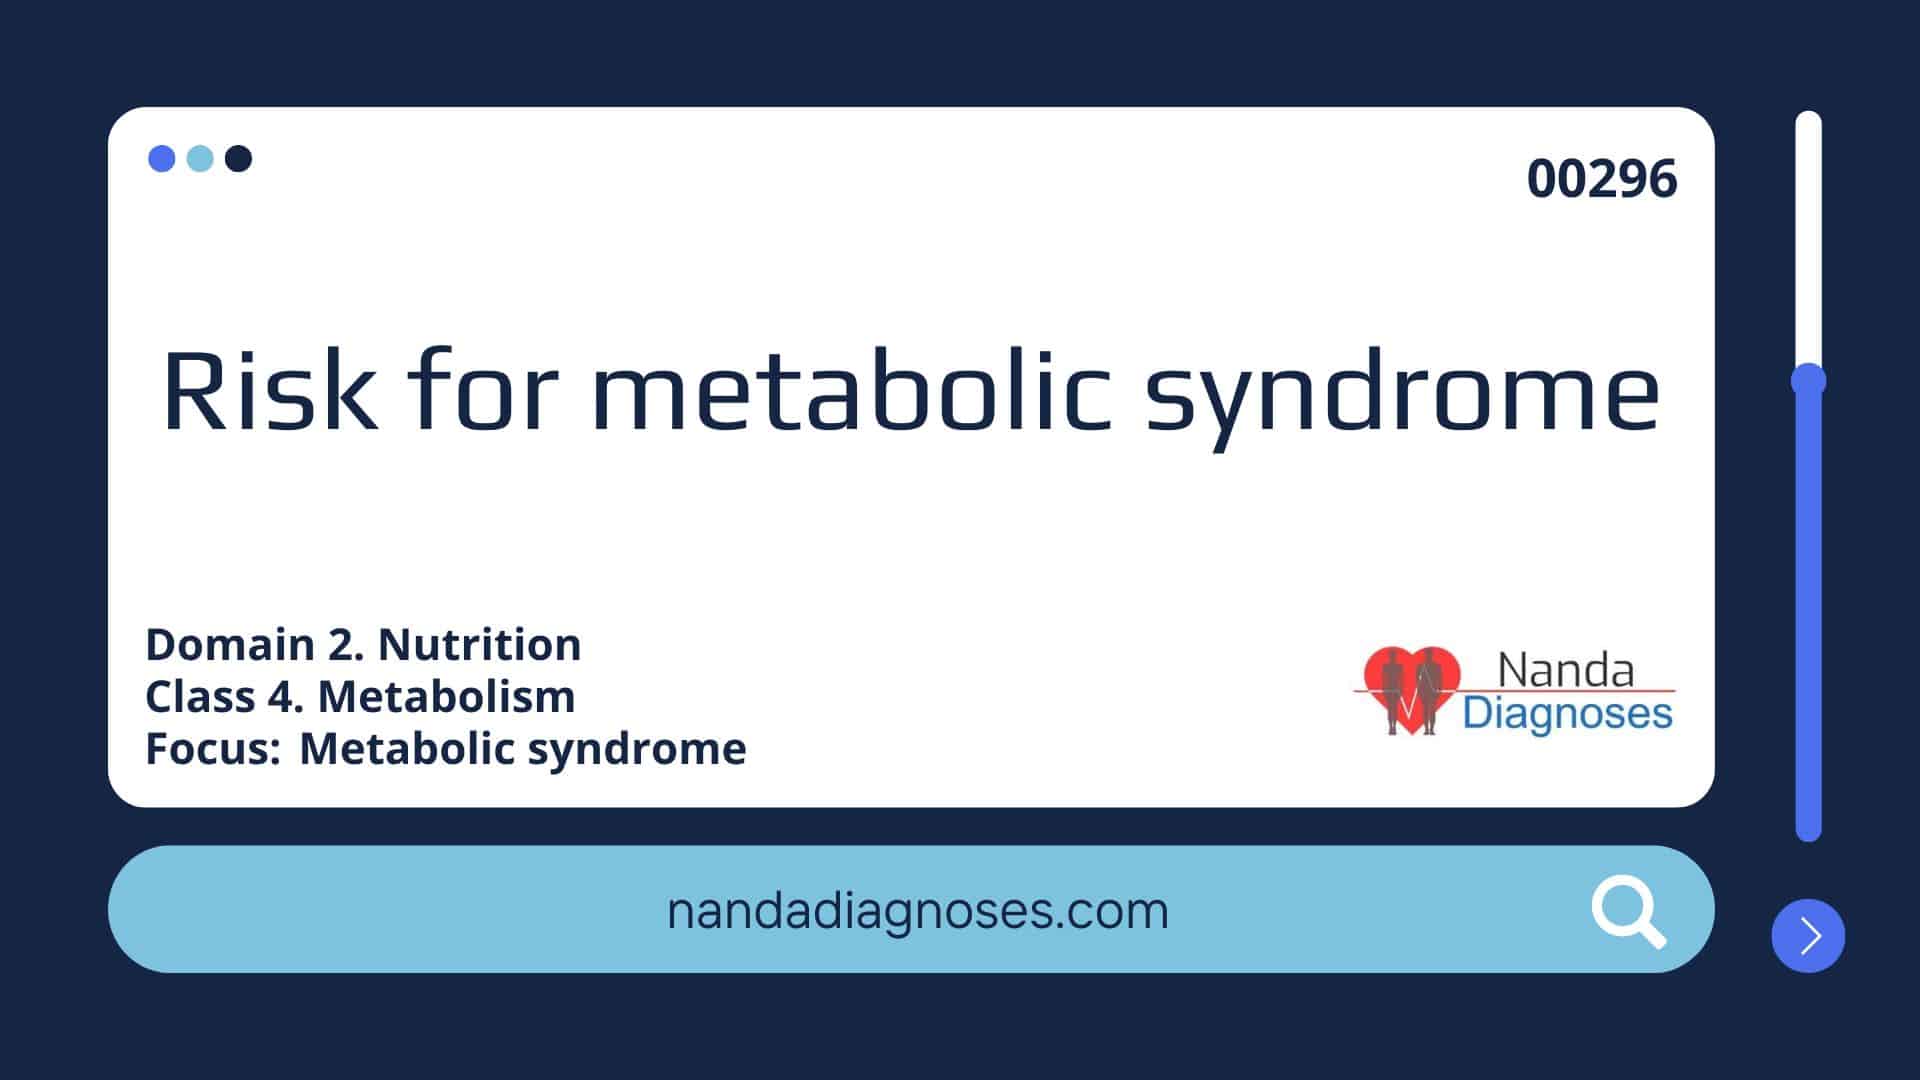 Nursing diagnosis Risk for metabolic syndrome